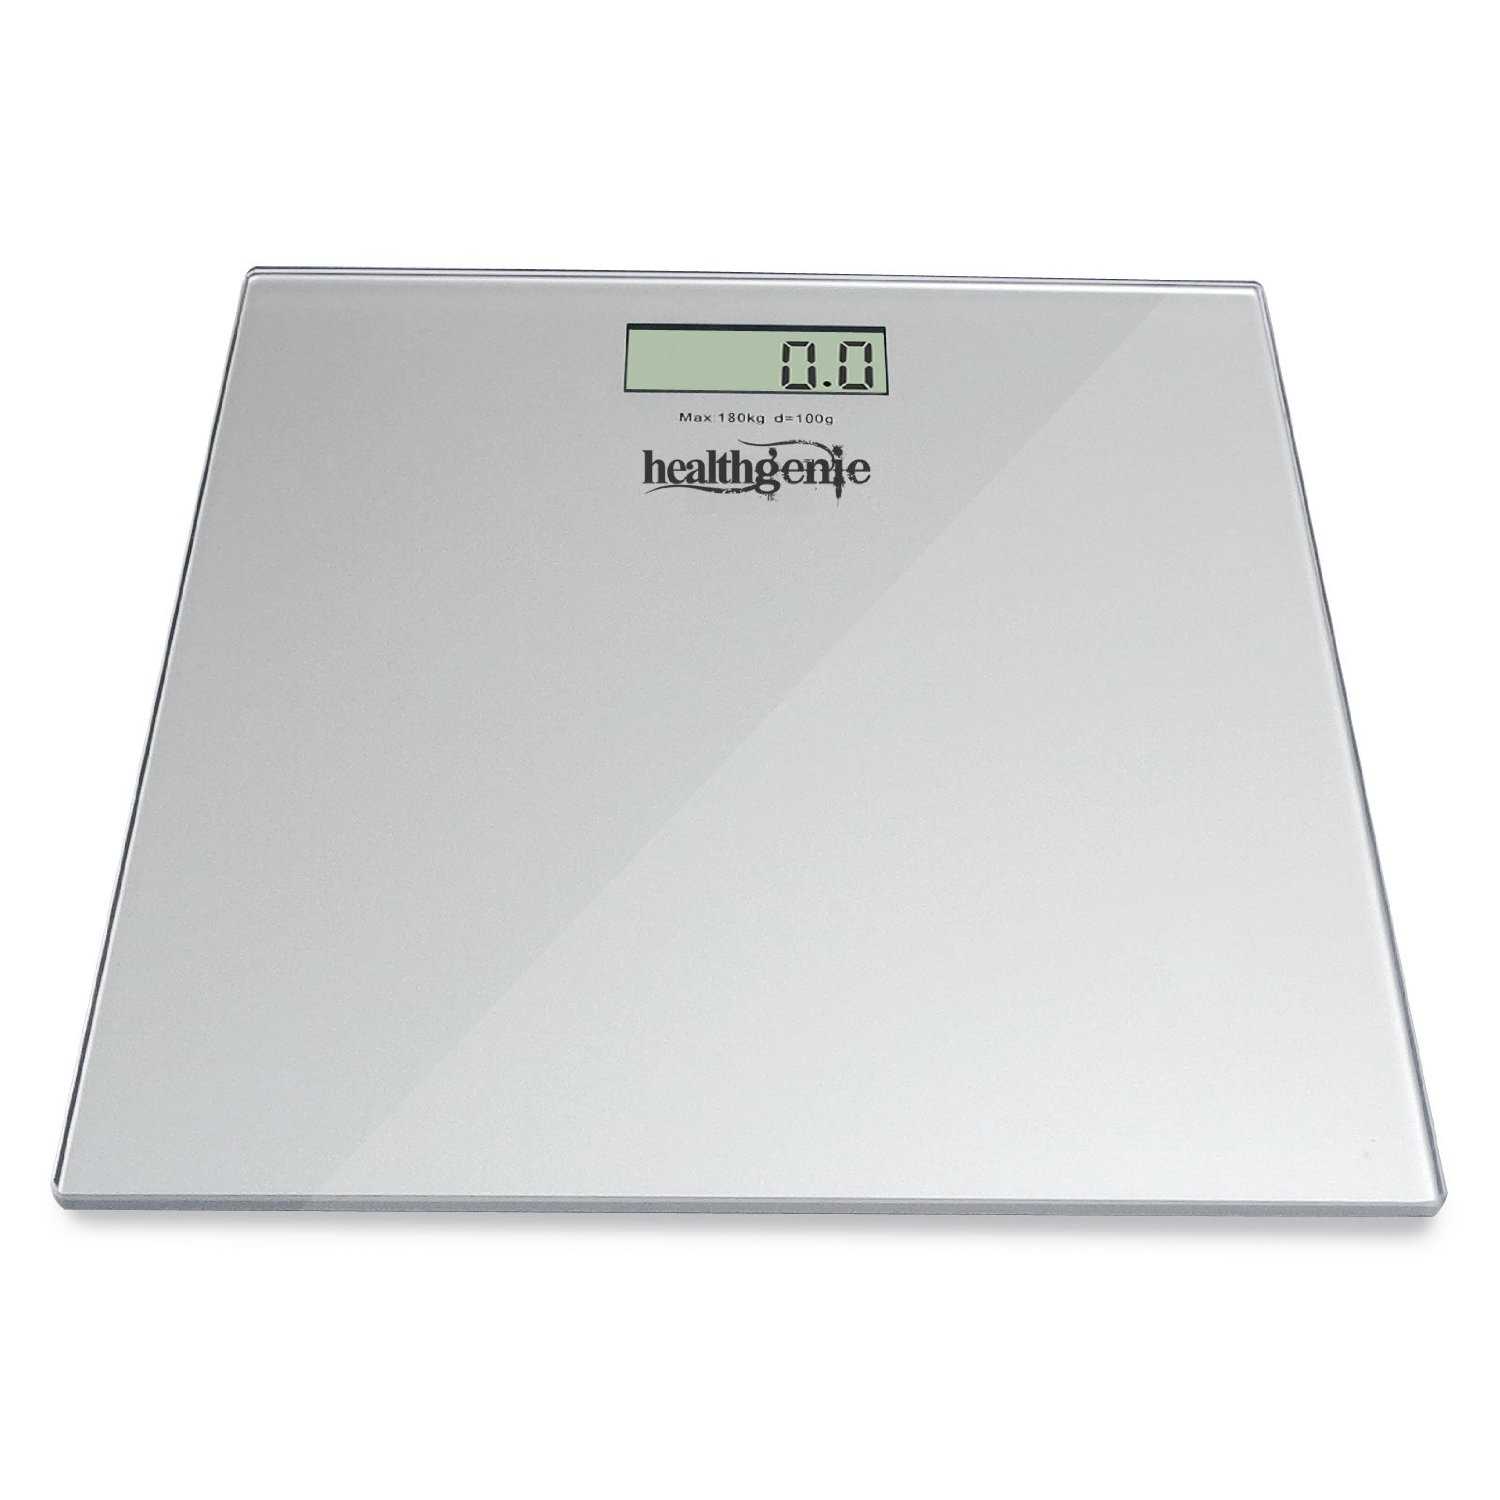 Omron Body Fat Analyzer, Model Name/Number: HBF375, Maximum Weight